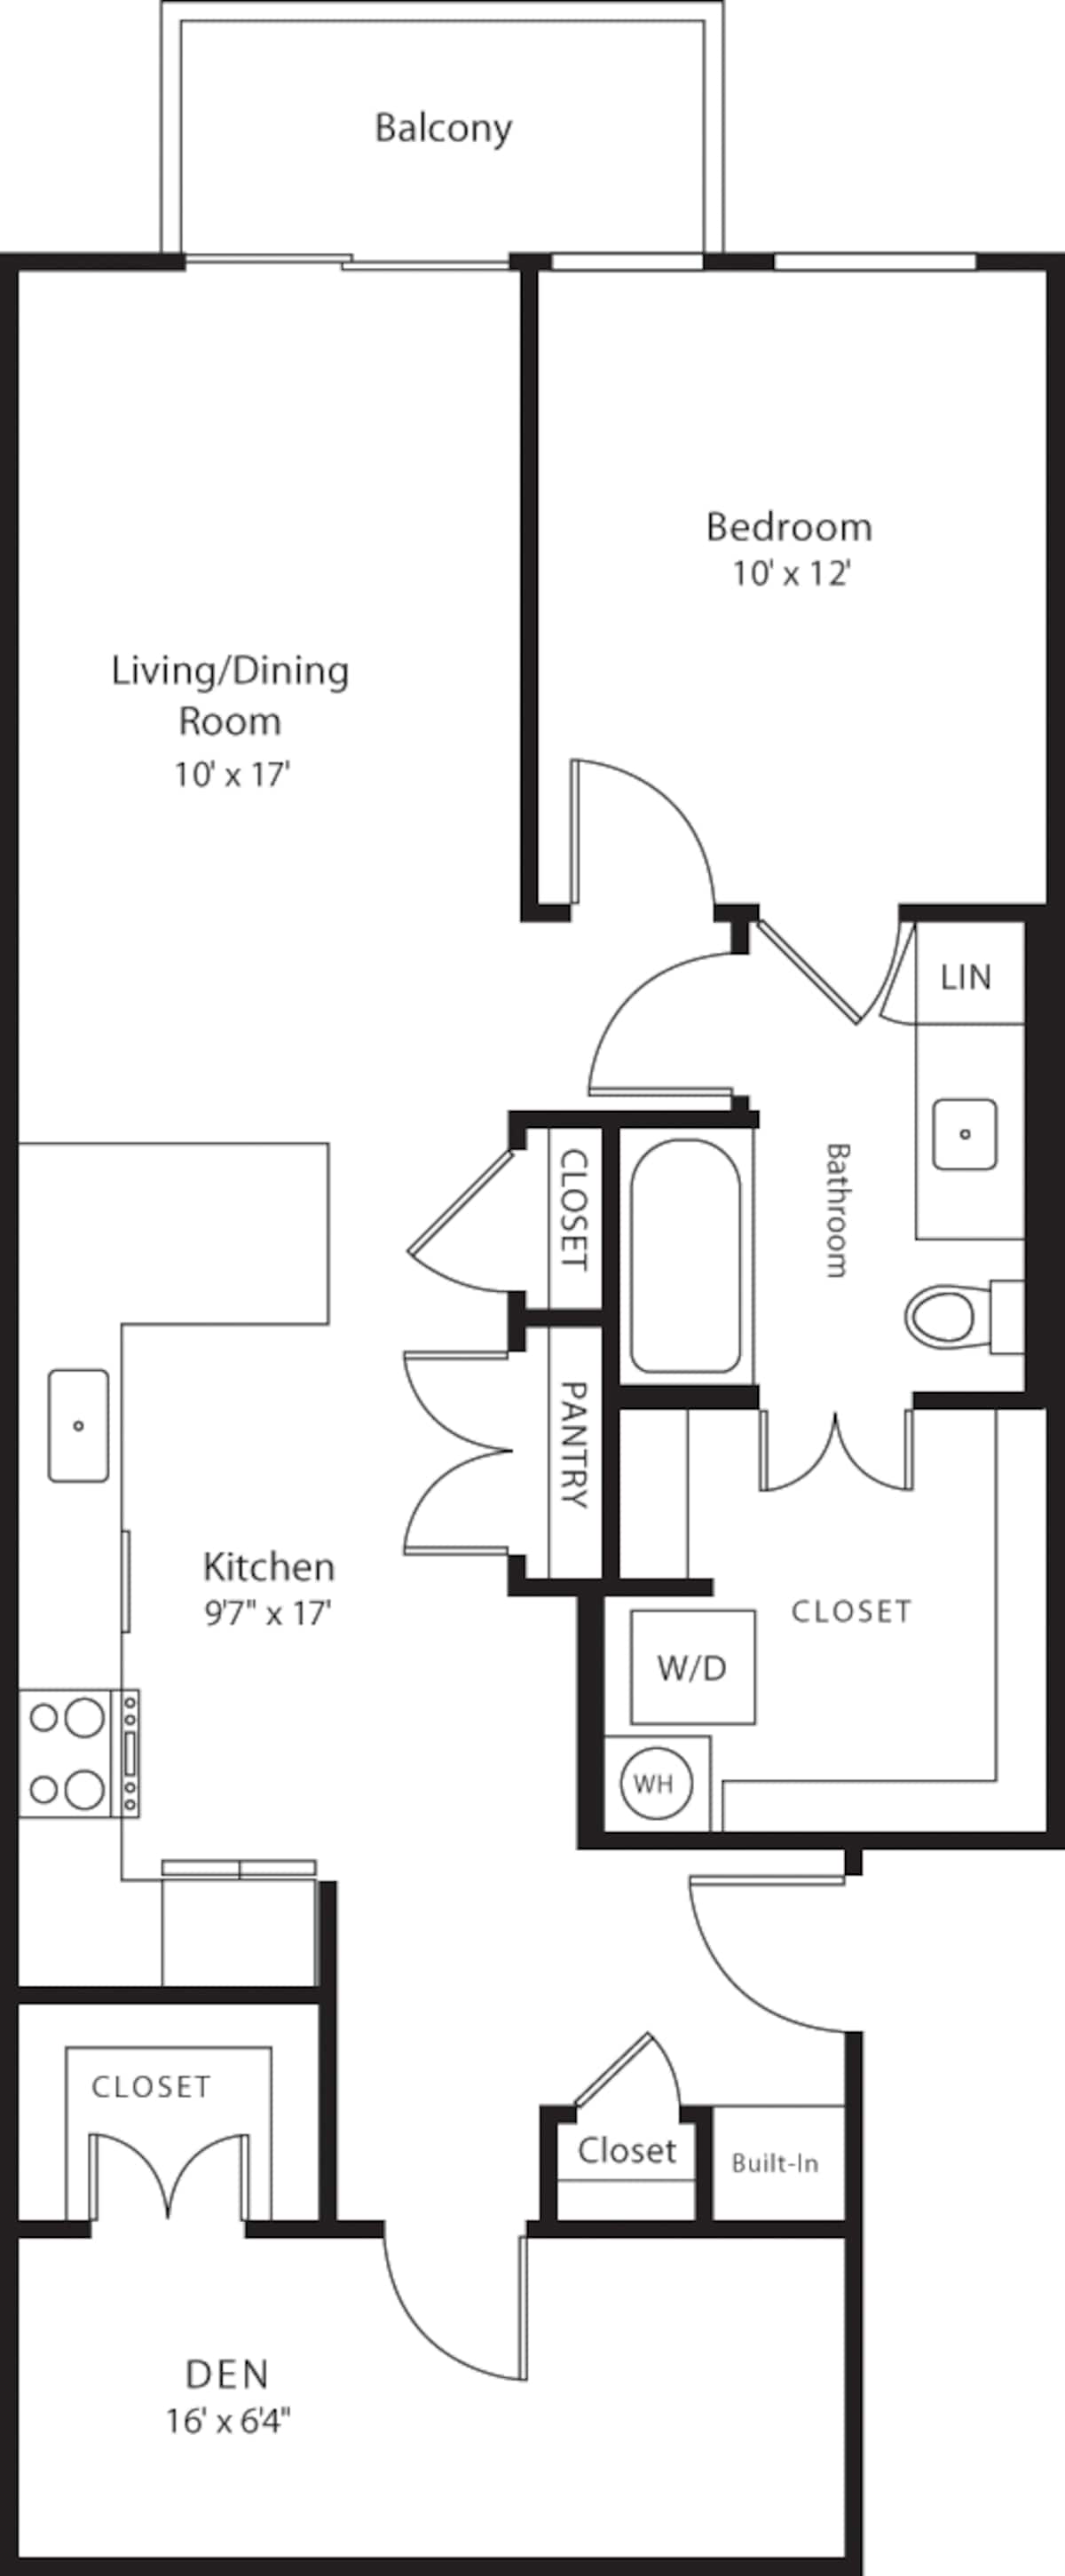 Floorplan diagram for A24, showing 1 bedroom